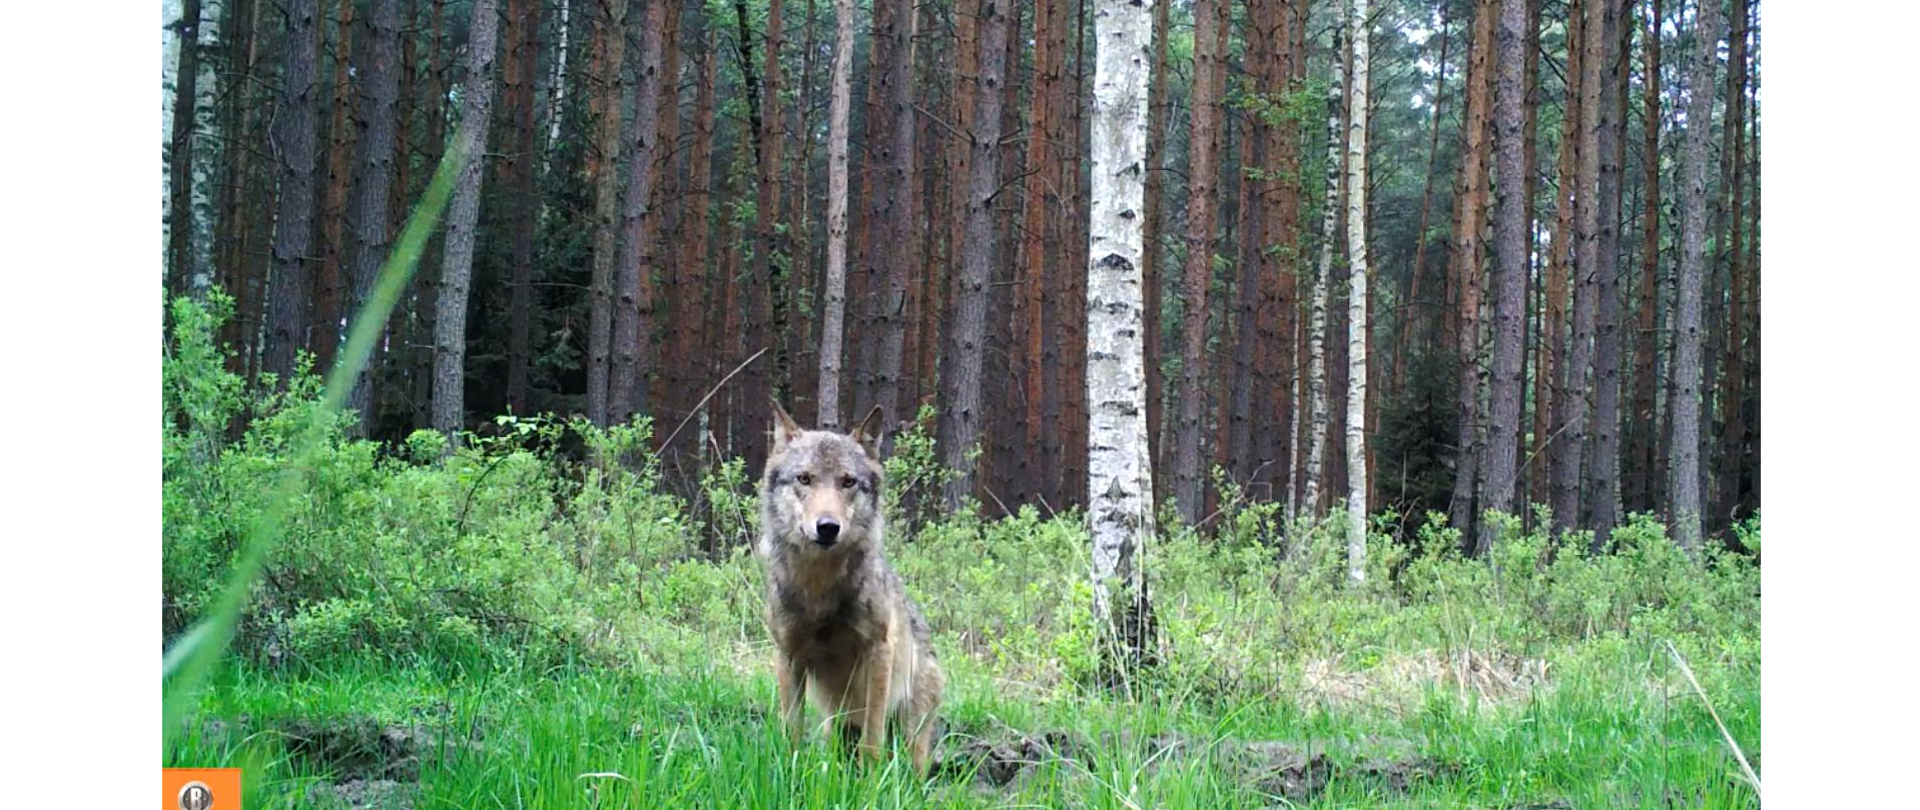 Wrocław: Monitoring wilka w obszarach Natura 2000